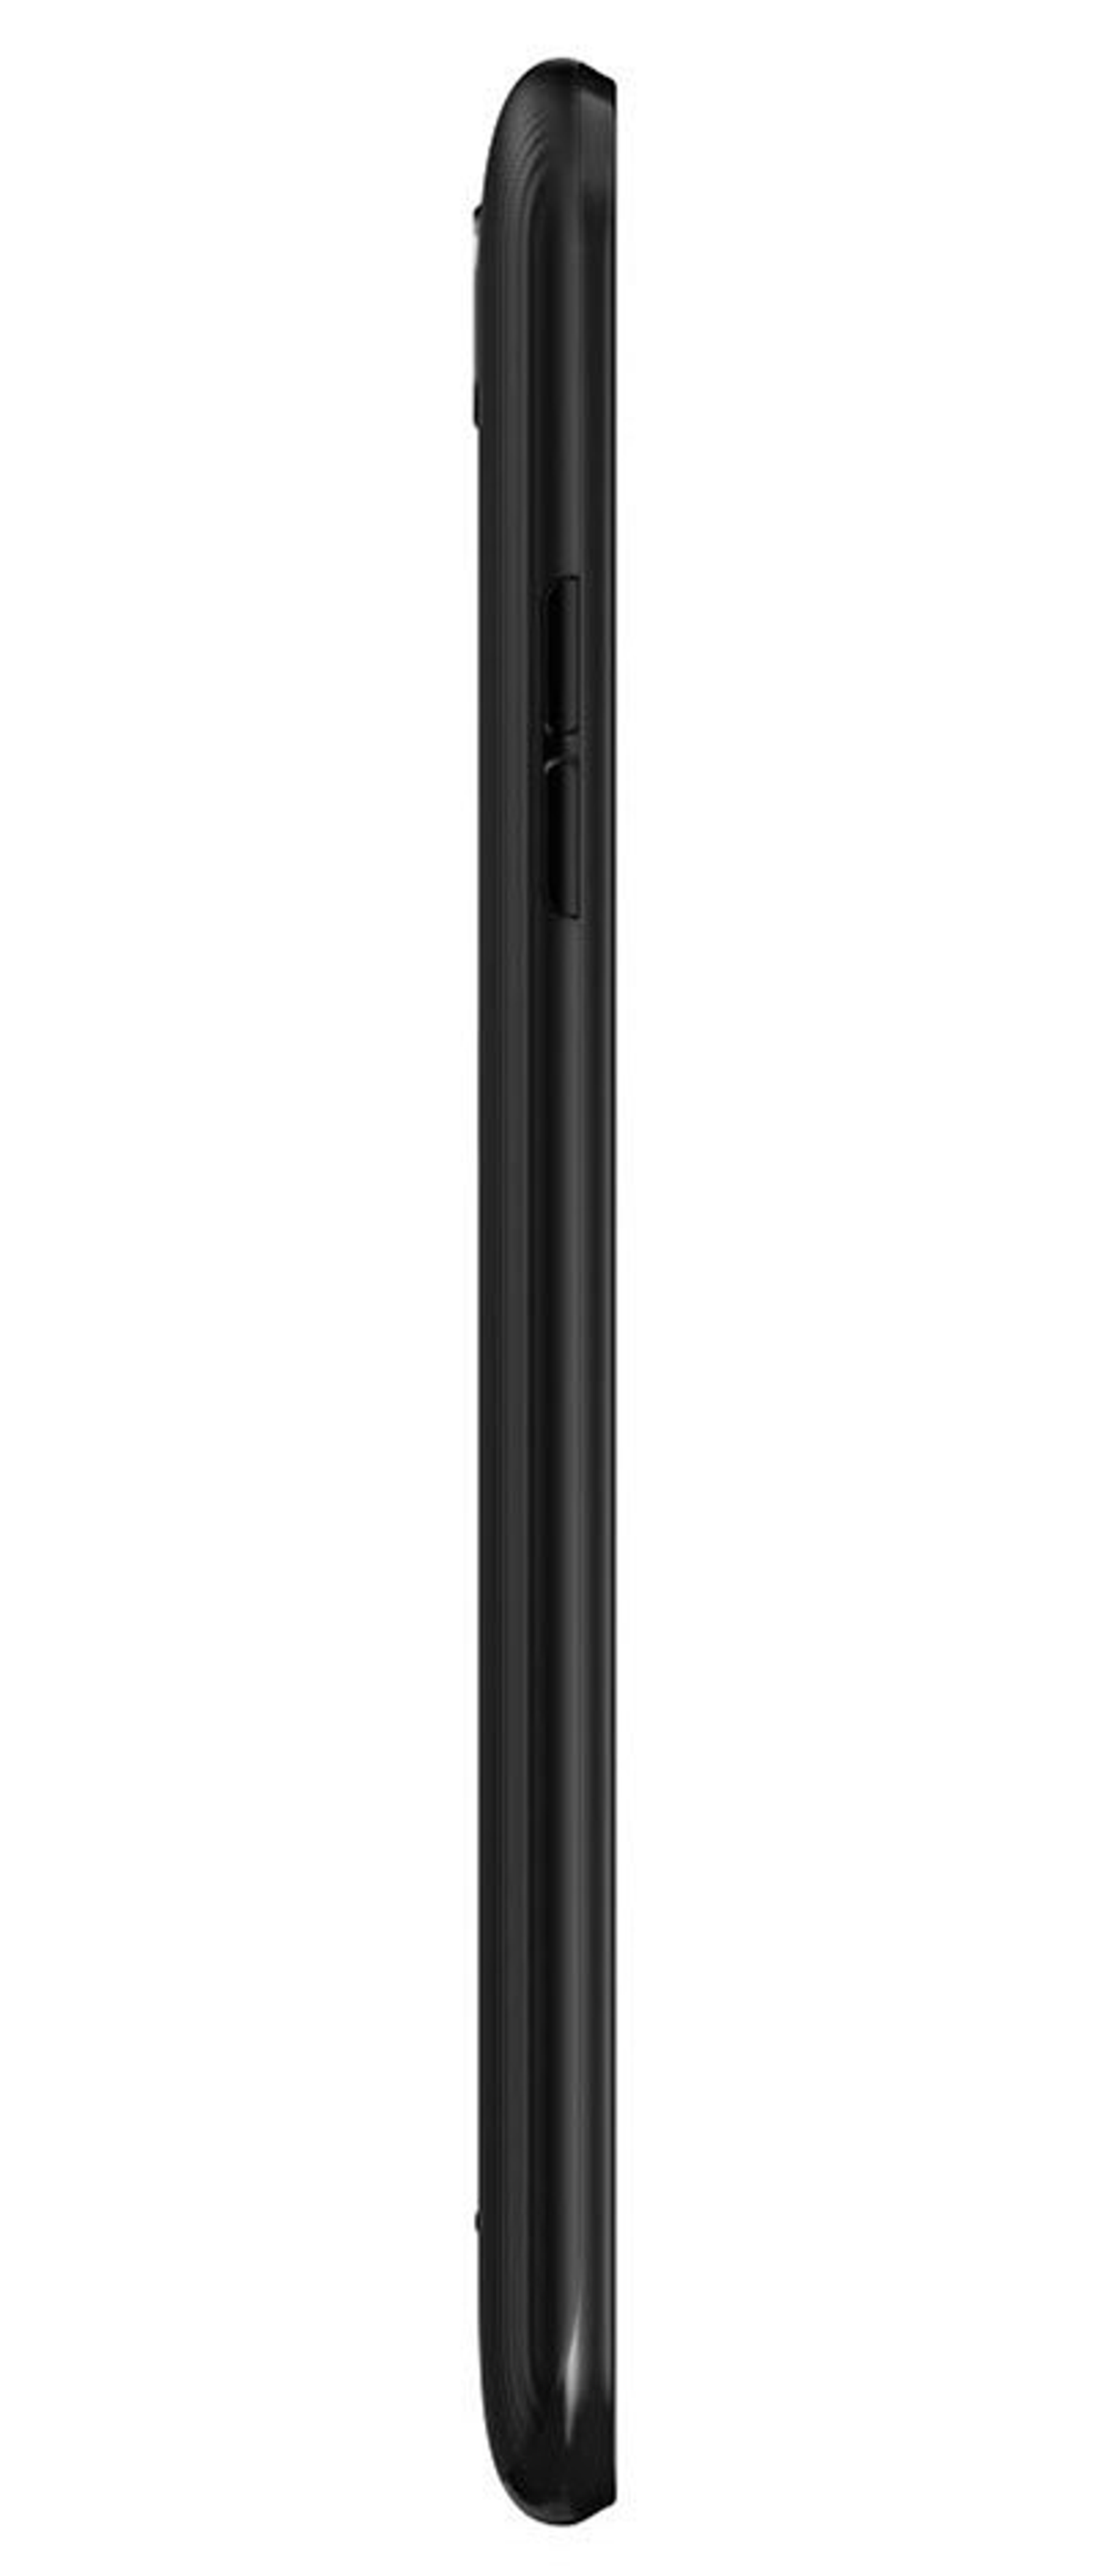 LG GB 2017 SINGLE SIM BLACK Schwarz K4 8